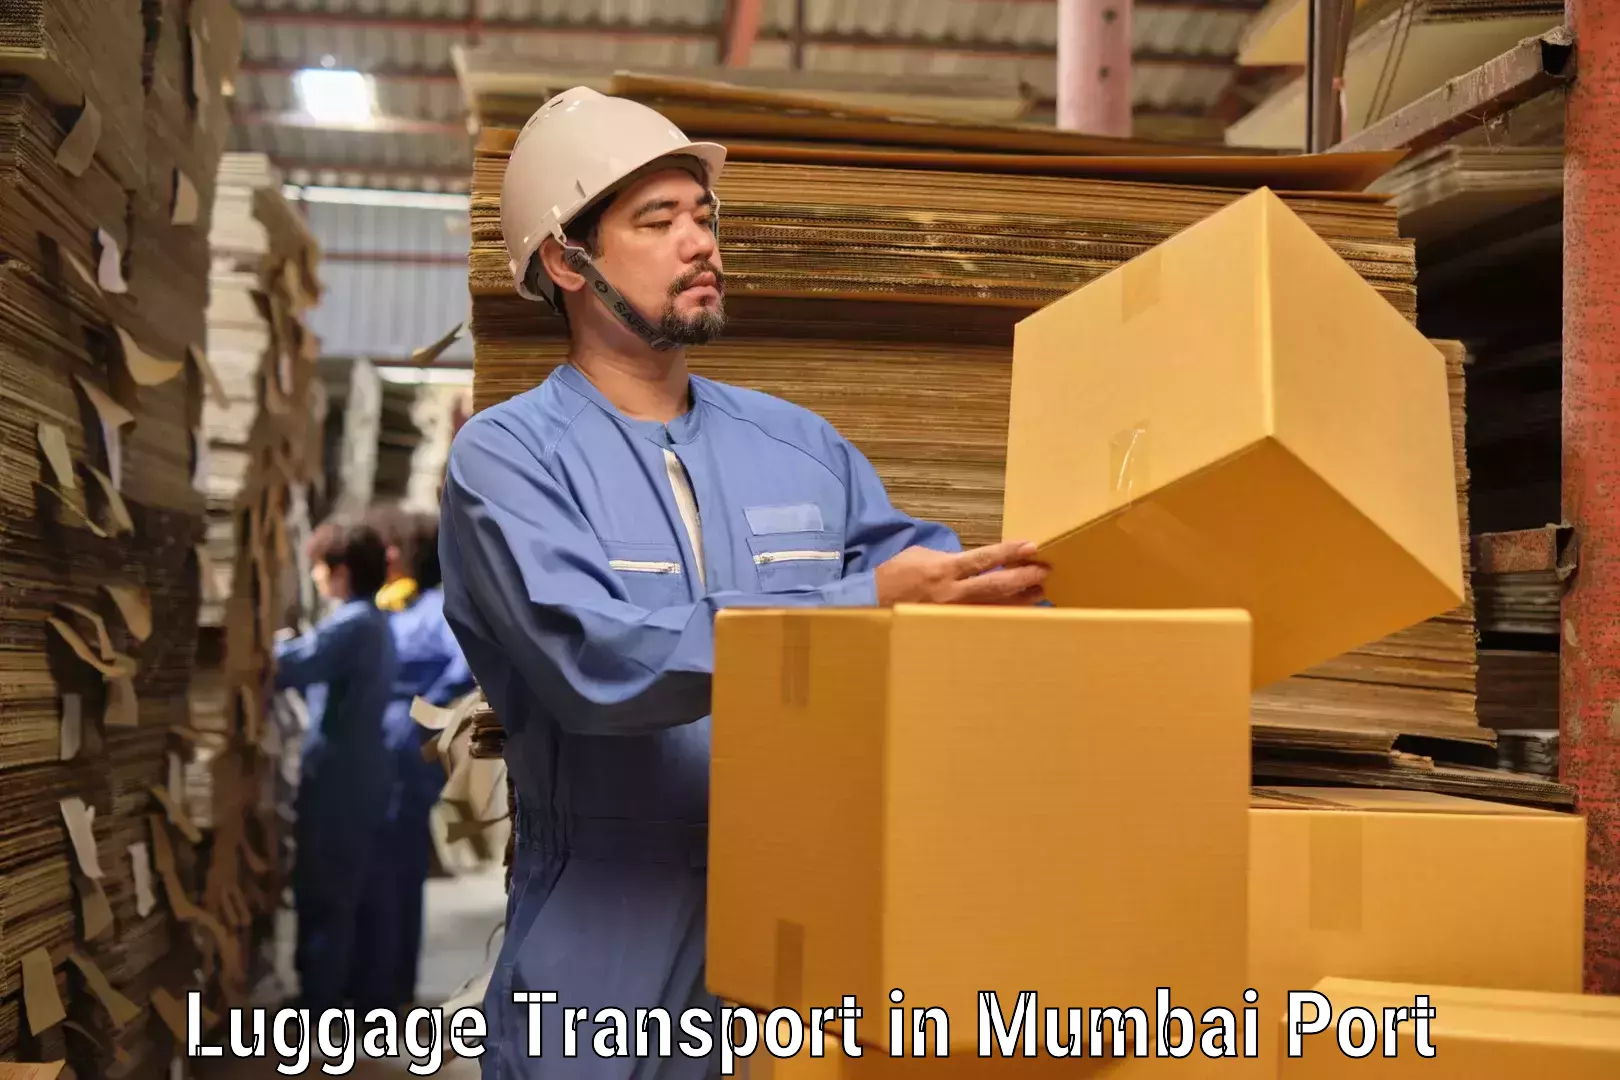 Tailored baggage transport in Mumbai Port